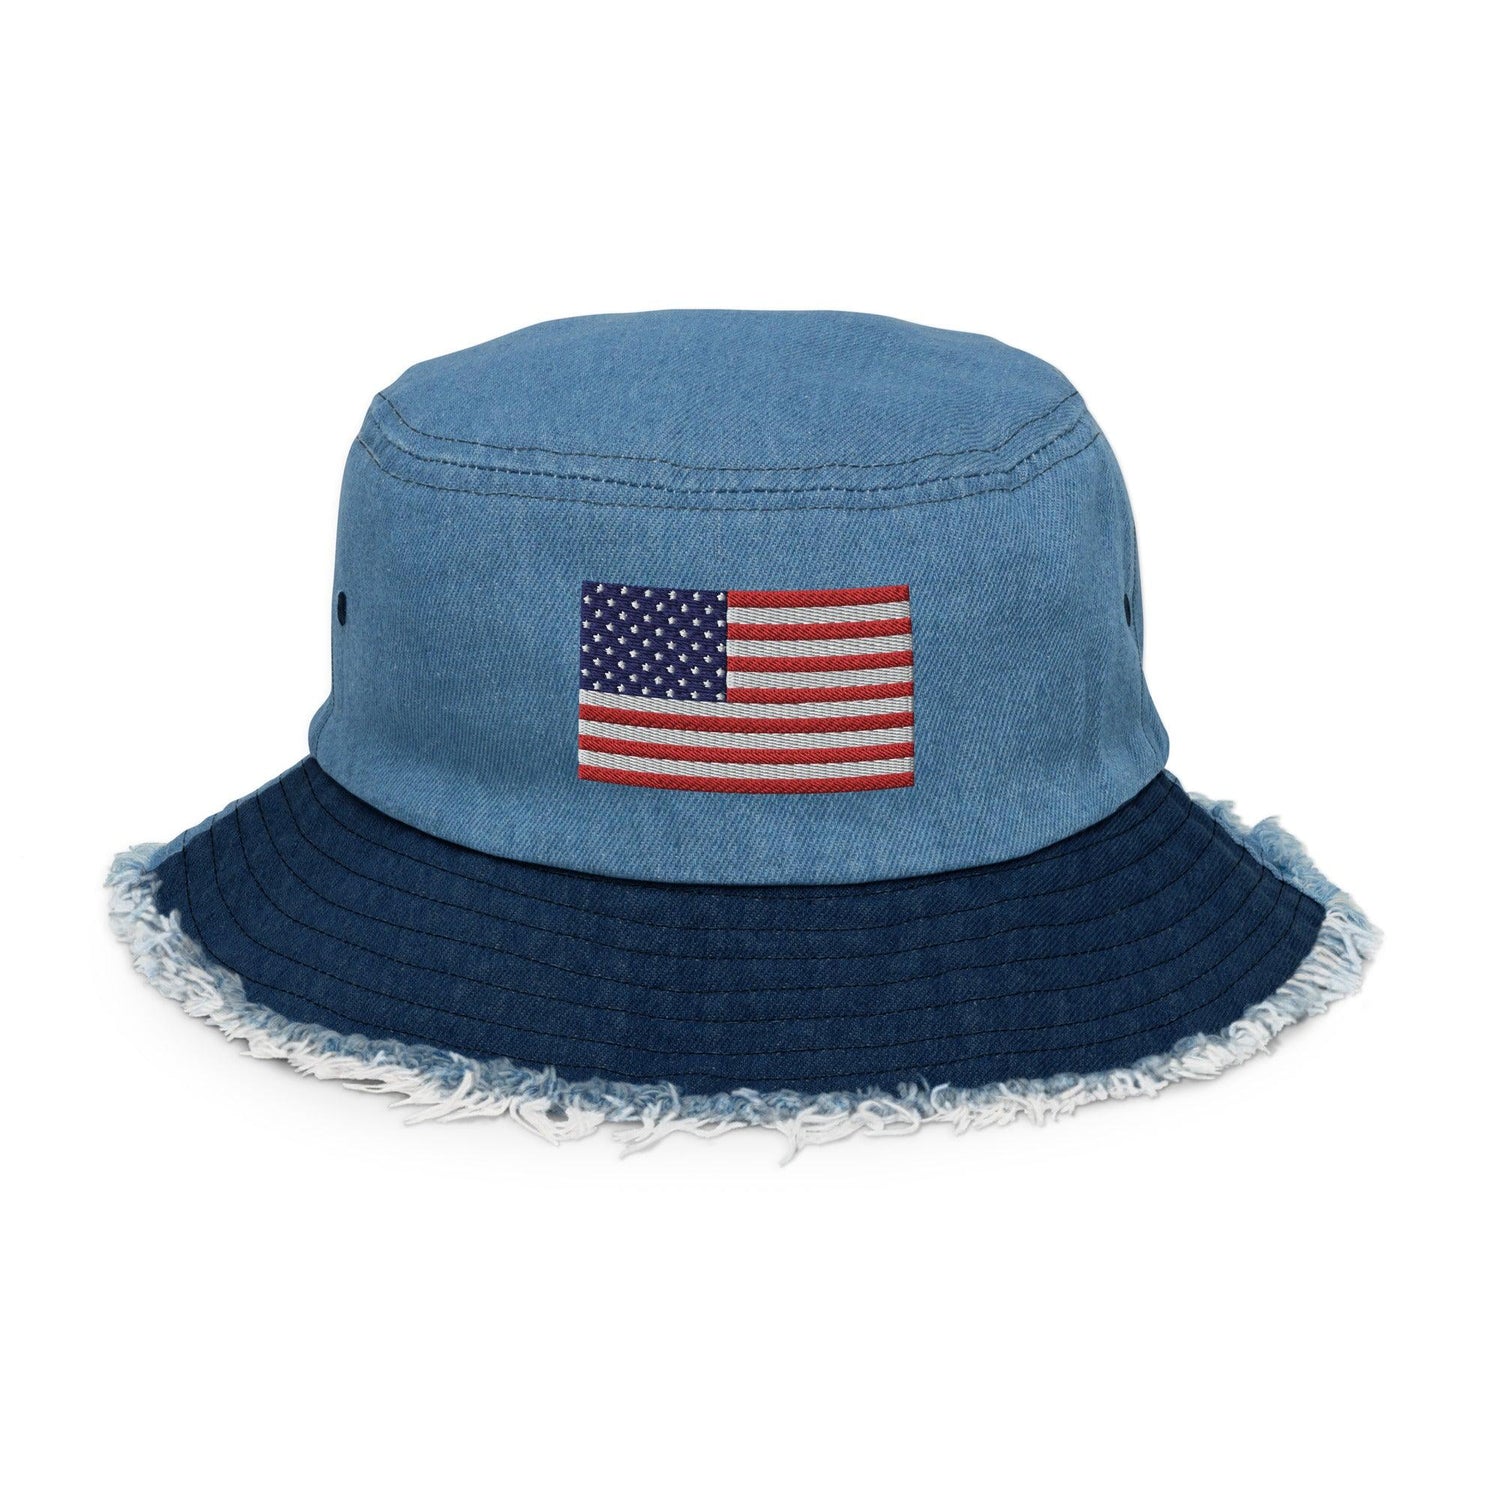 Embordered American Flag Distressed Denim Bucket Hat